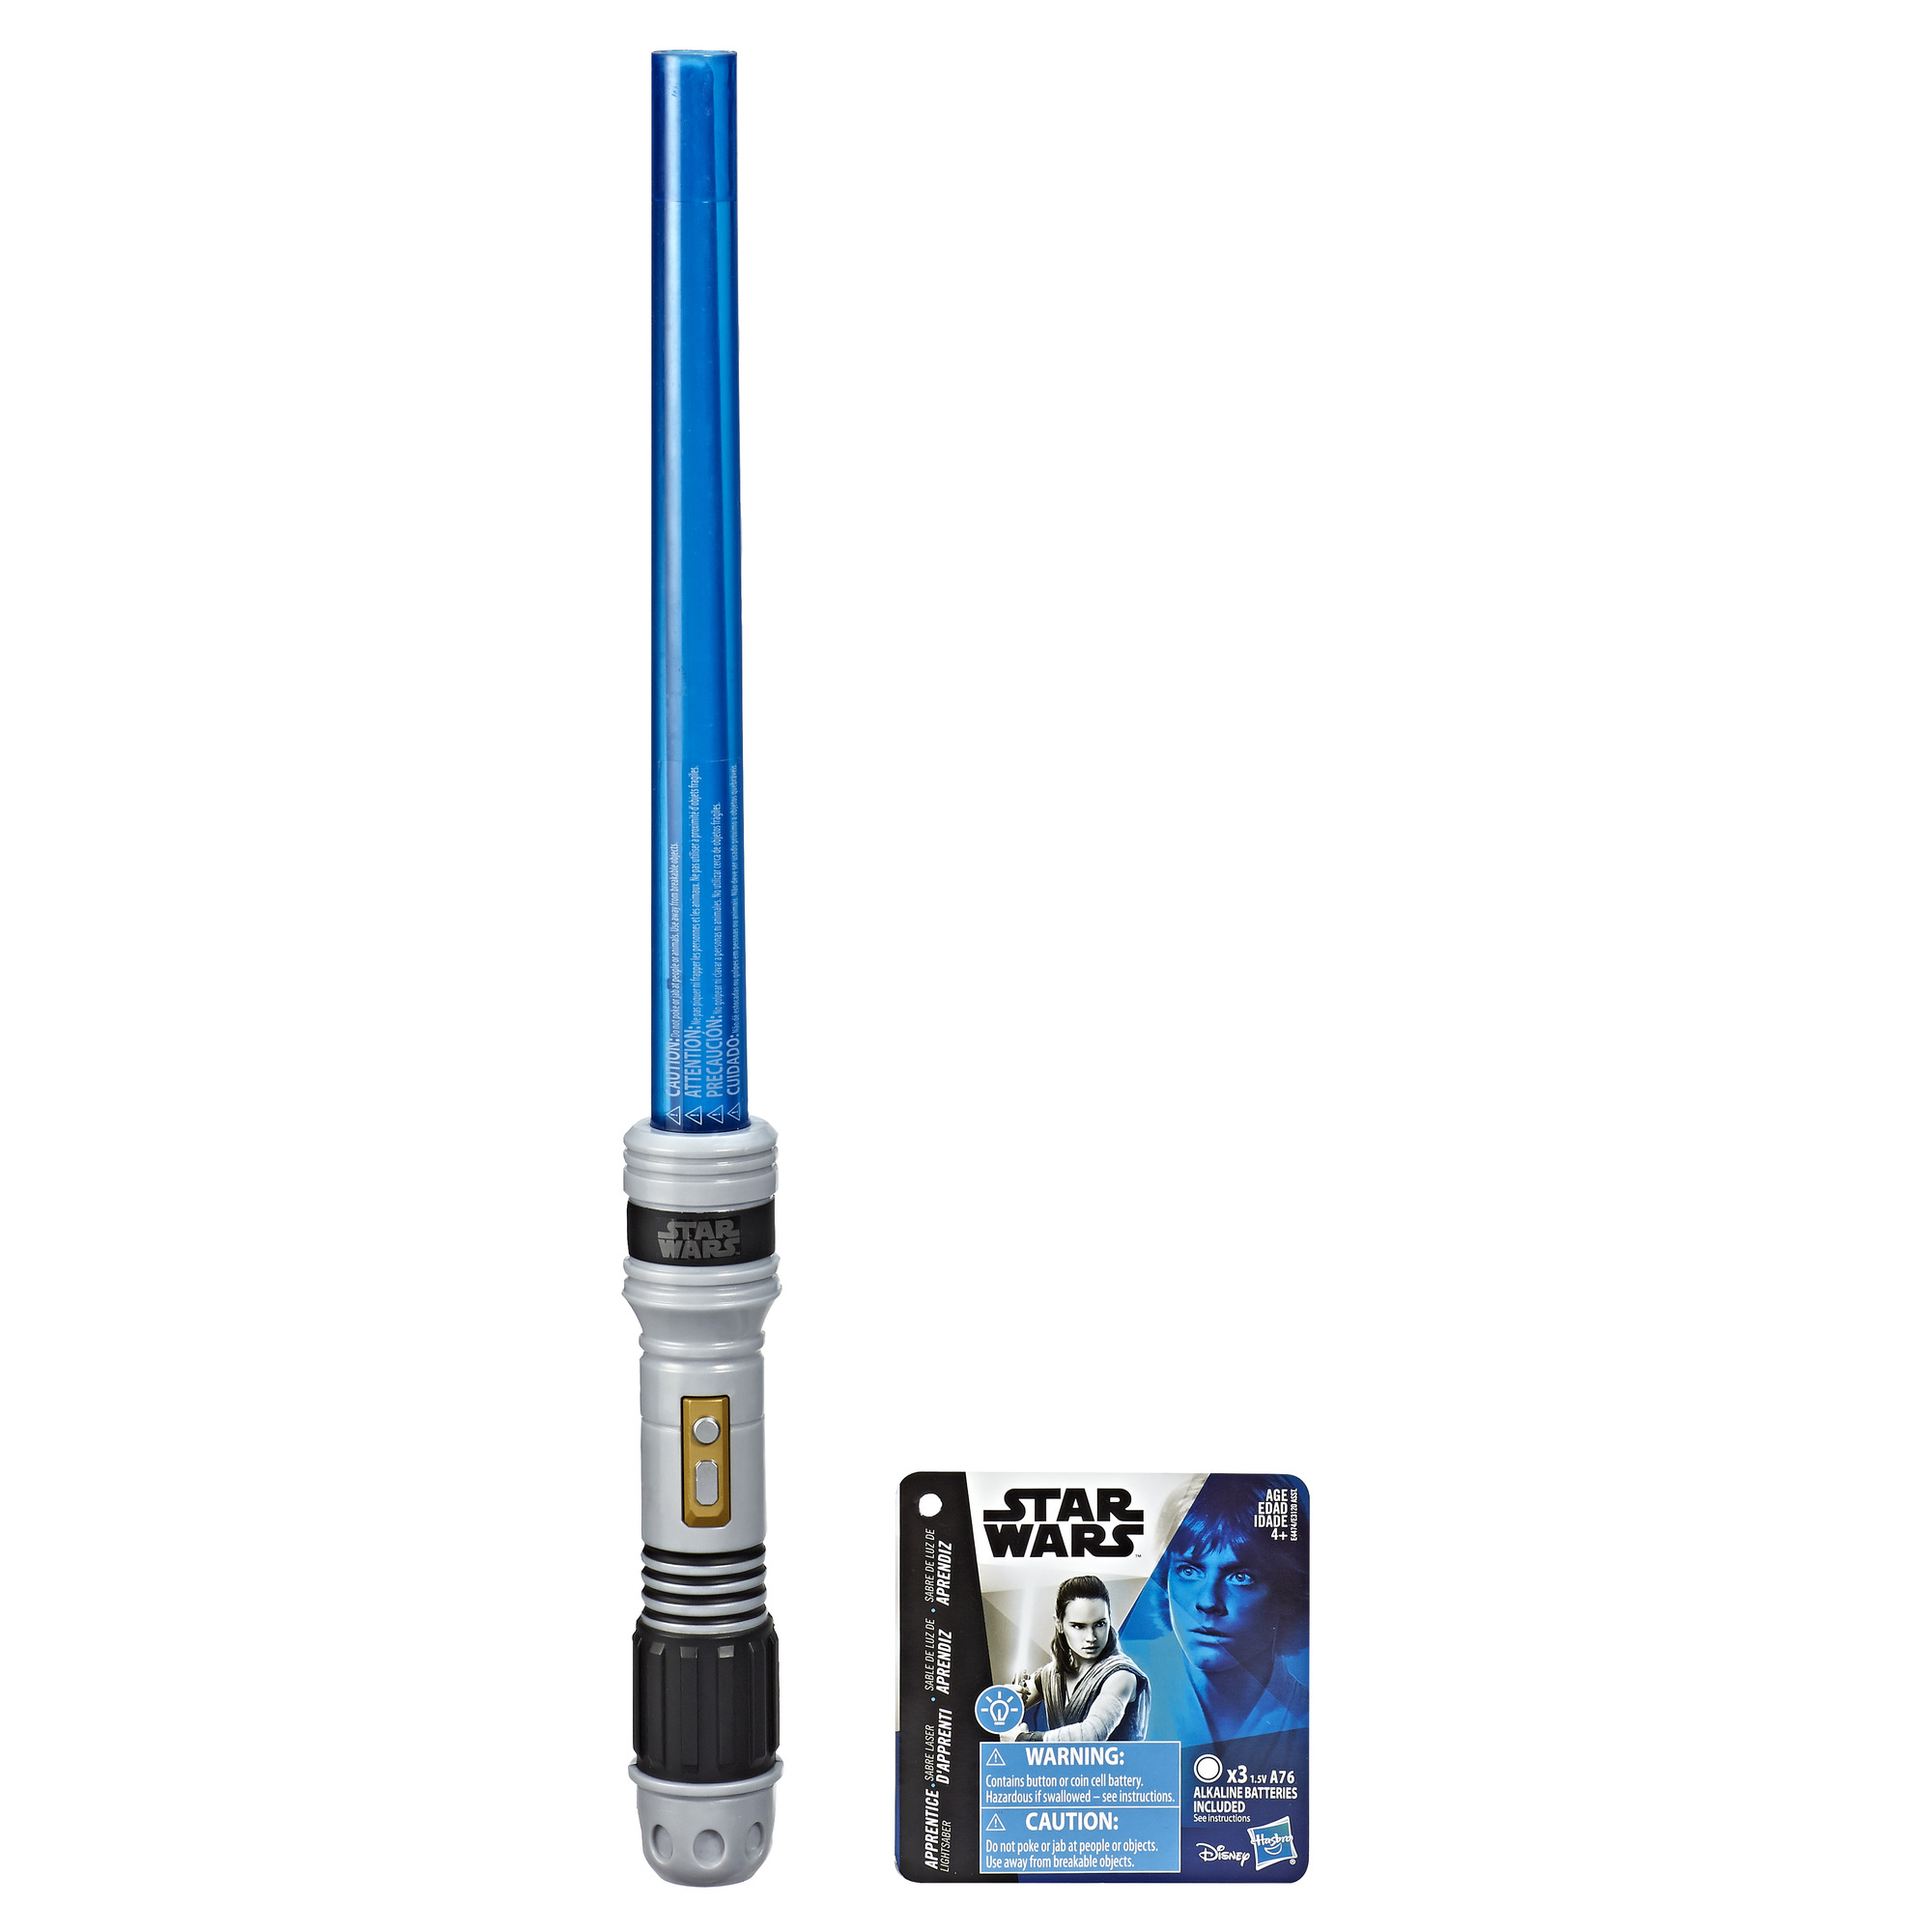 TROS Jedi Apprentice Blue Lightsaber Toy 1